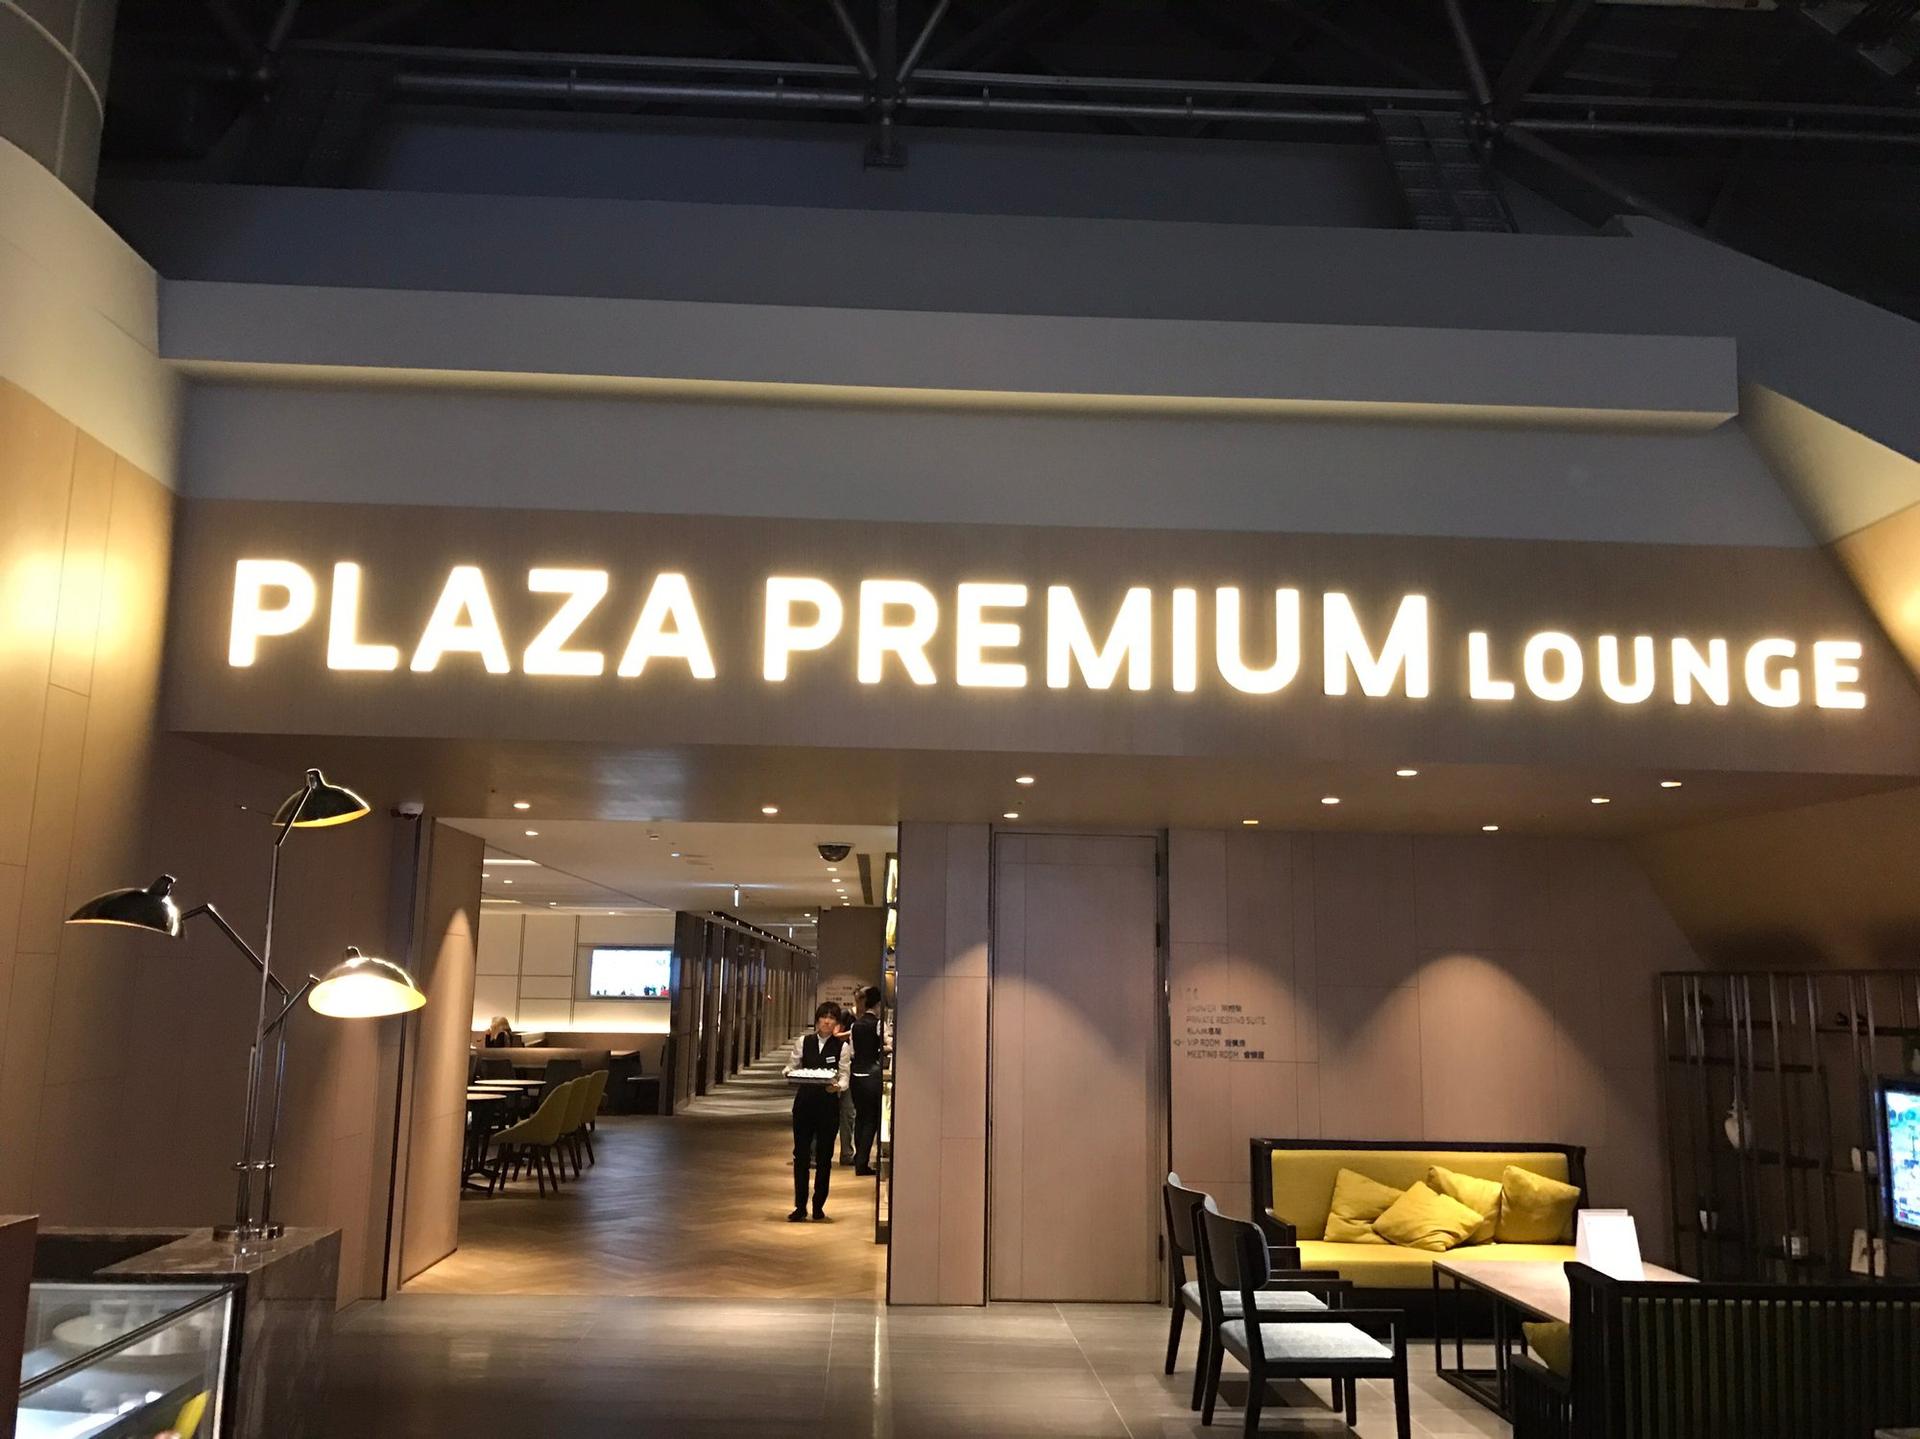 Plaza Premium Lounge (Zone A) image 56 of 99